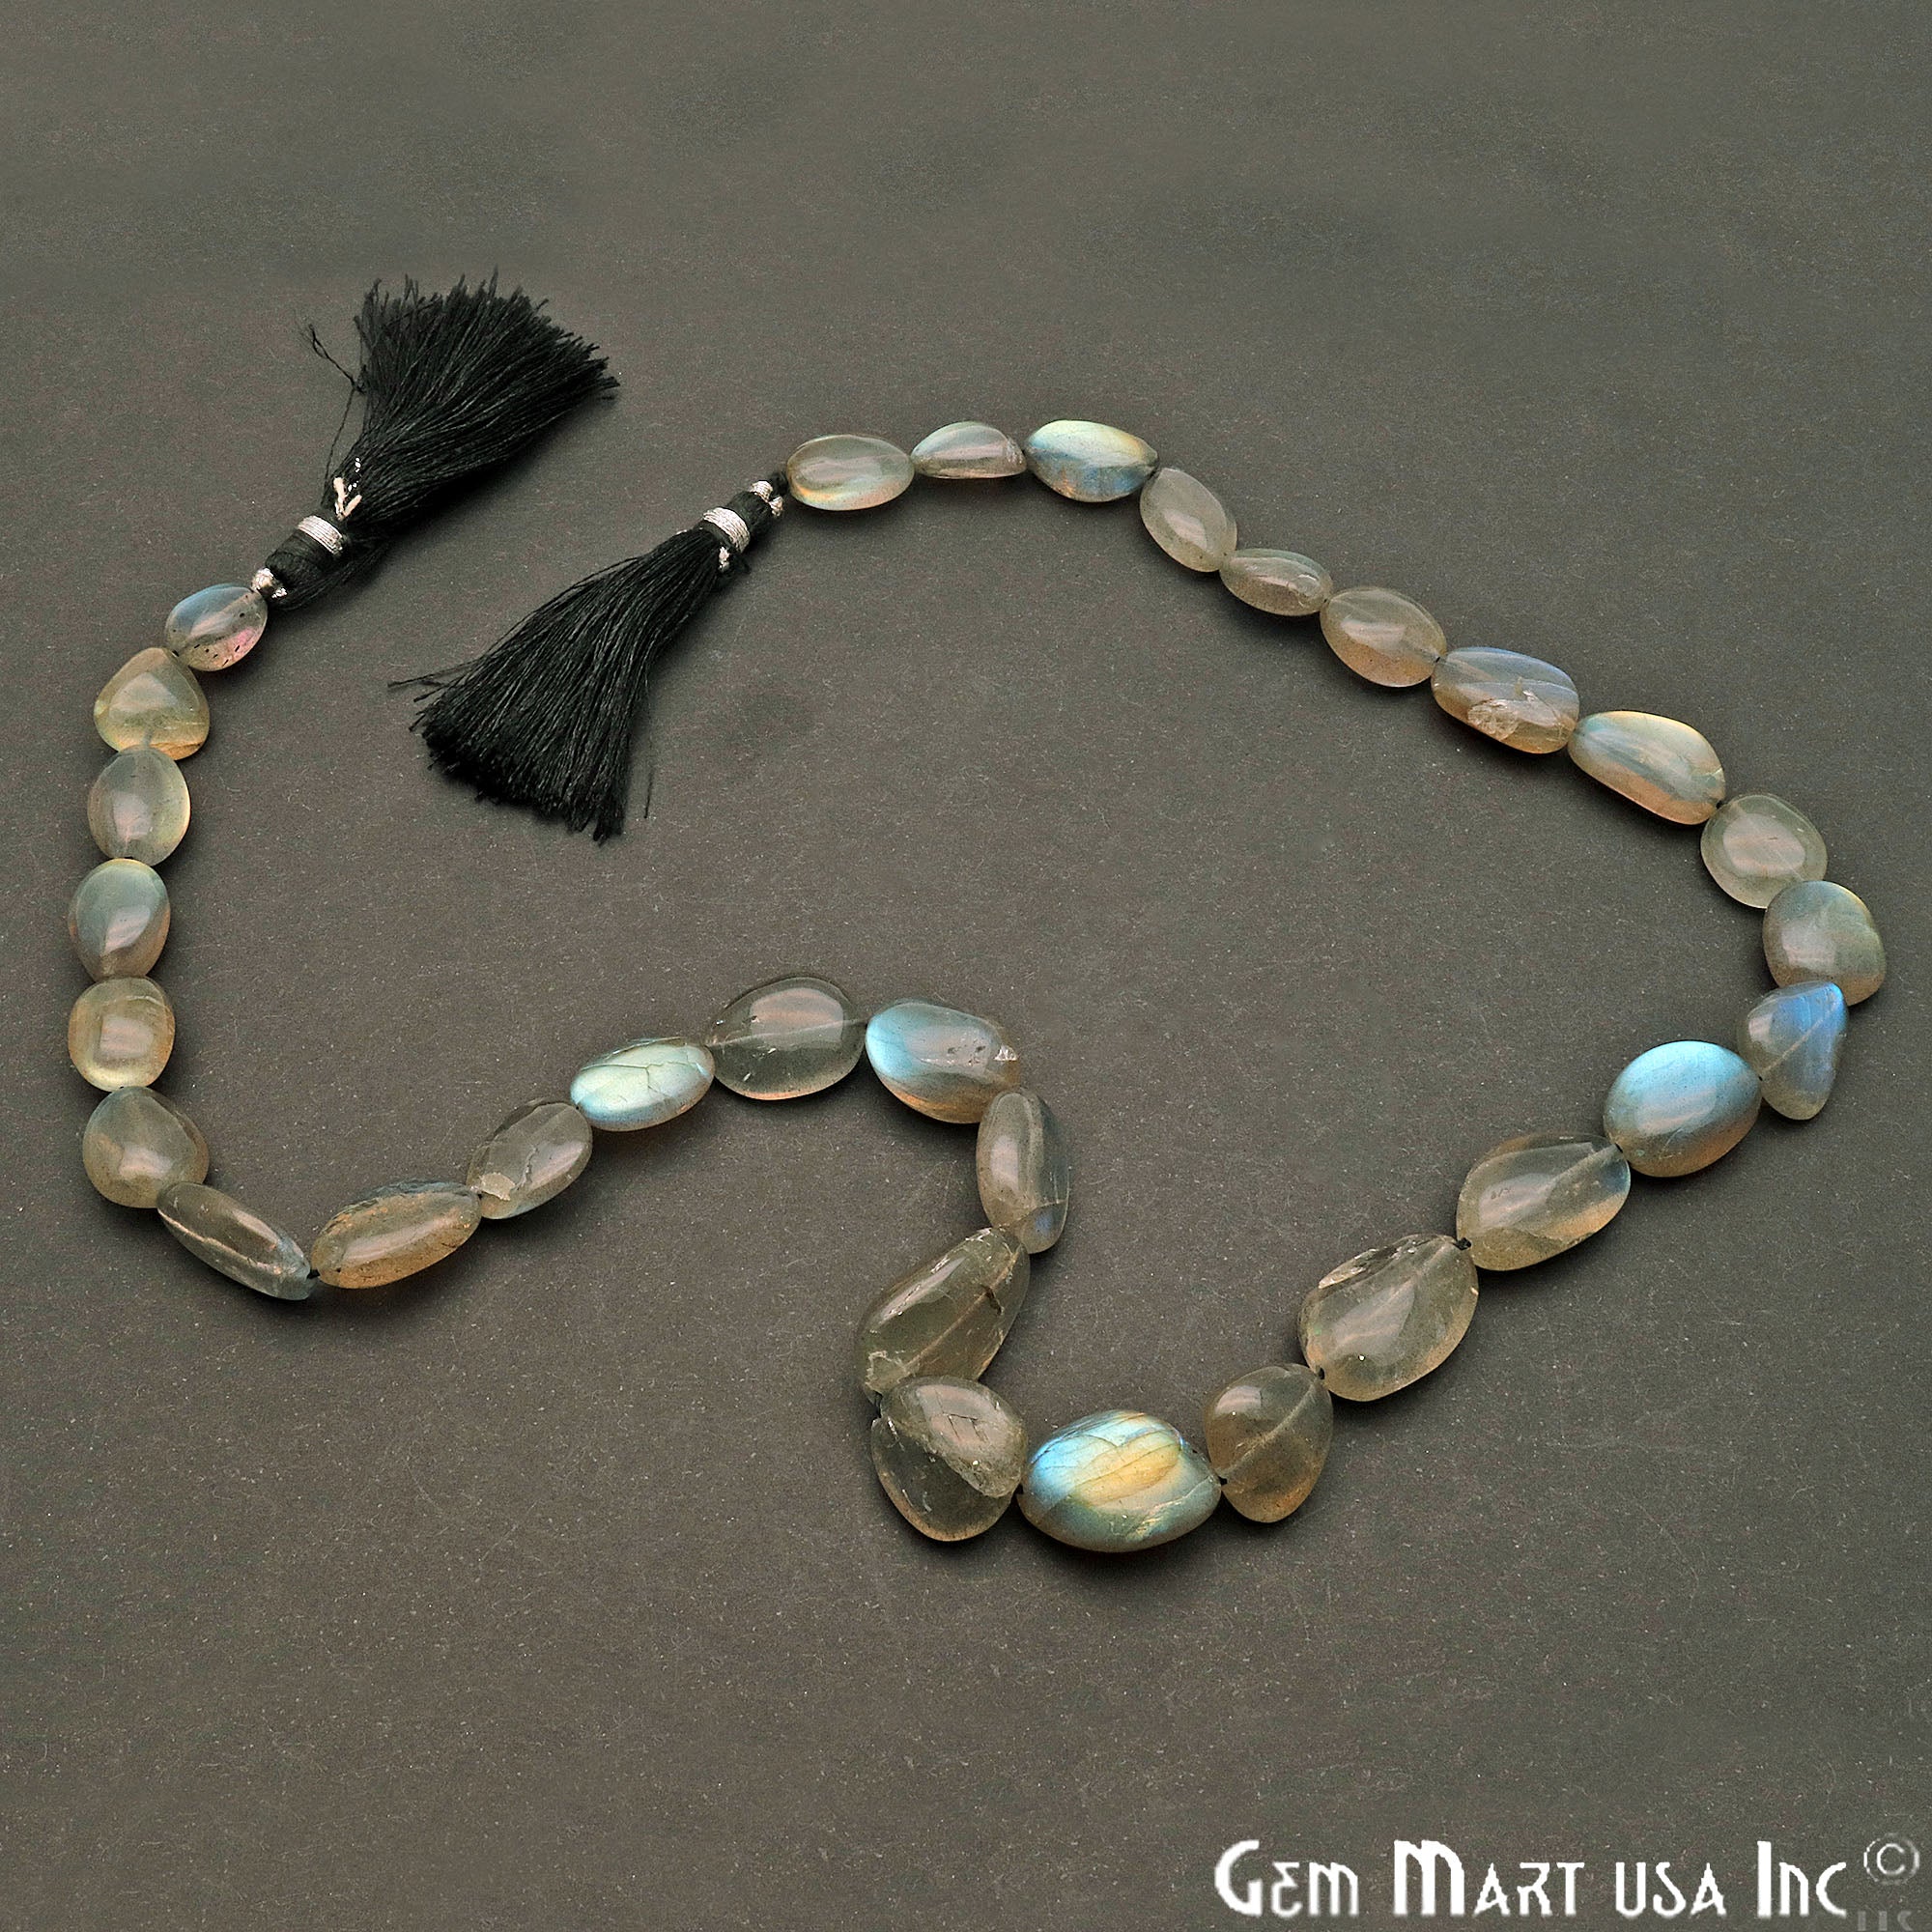 Labradorite Free Form 16x12mm Crafting Beads Gemstone Strands 16INCH - GemMartUSA